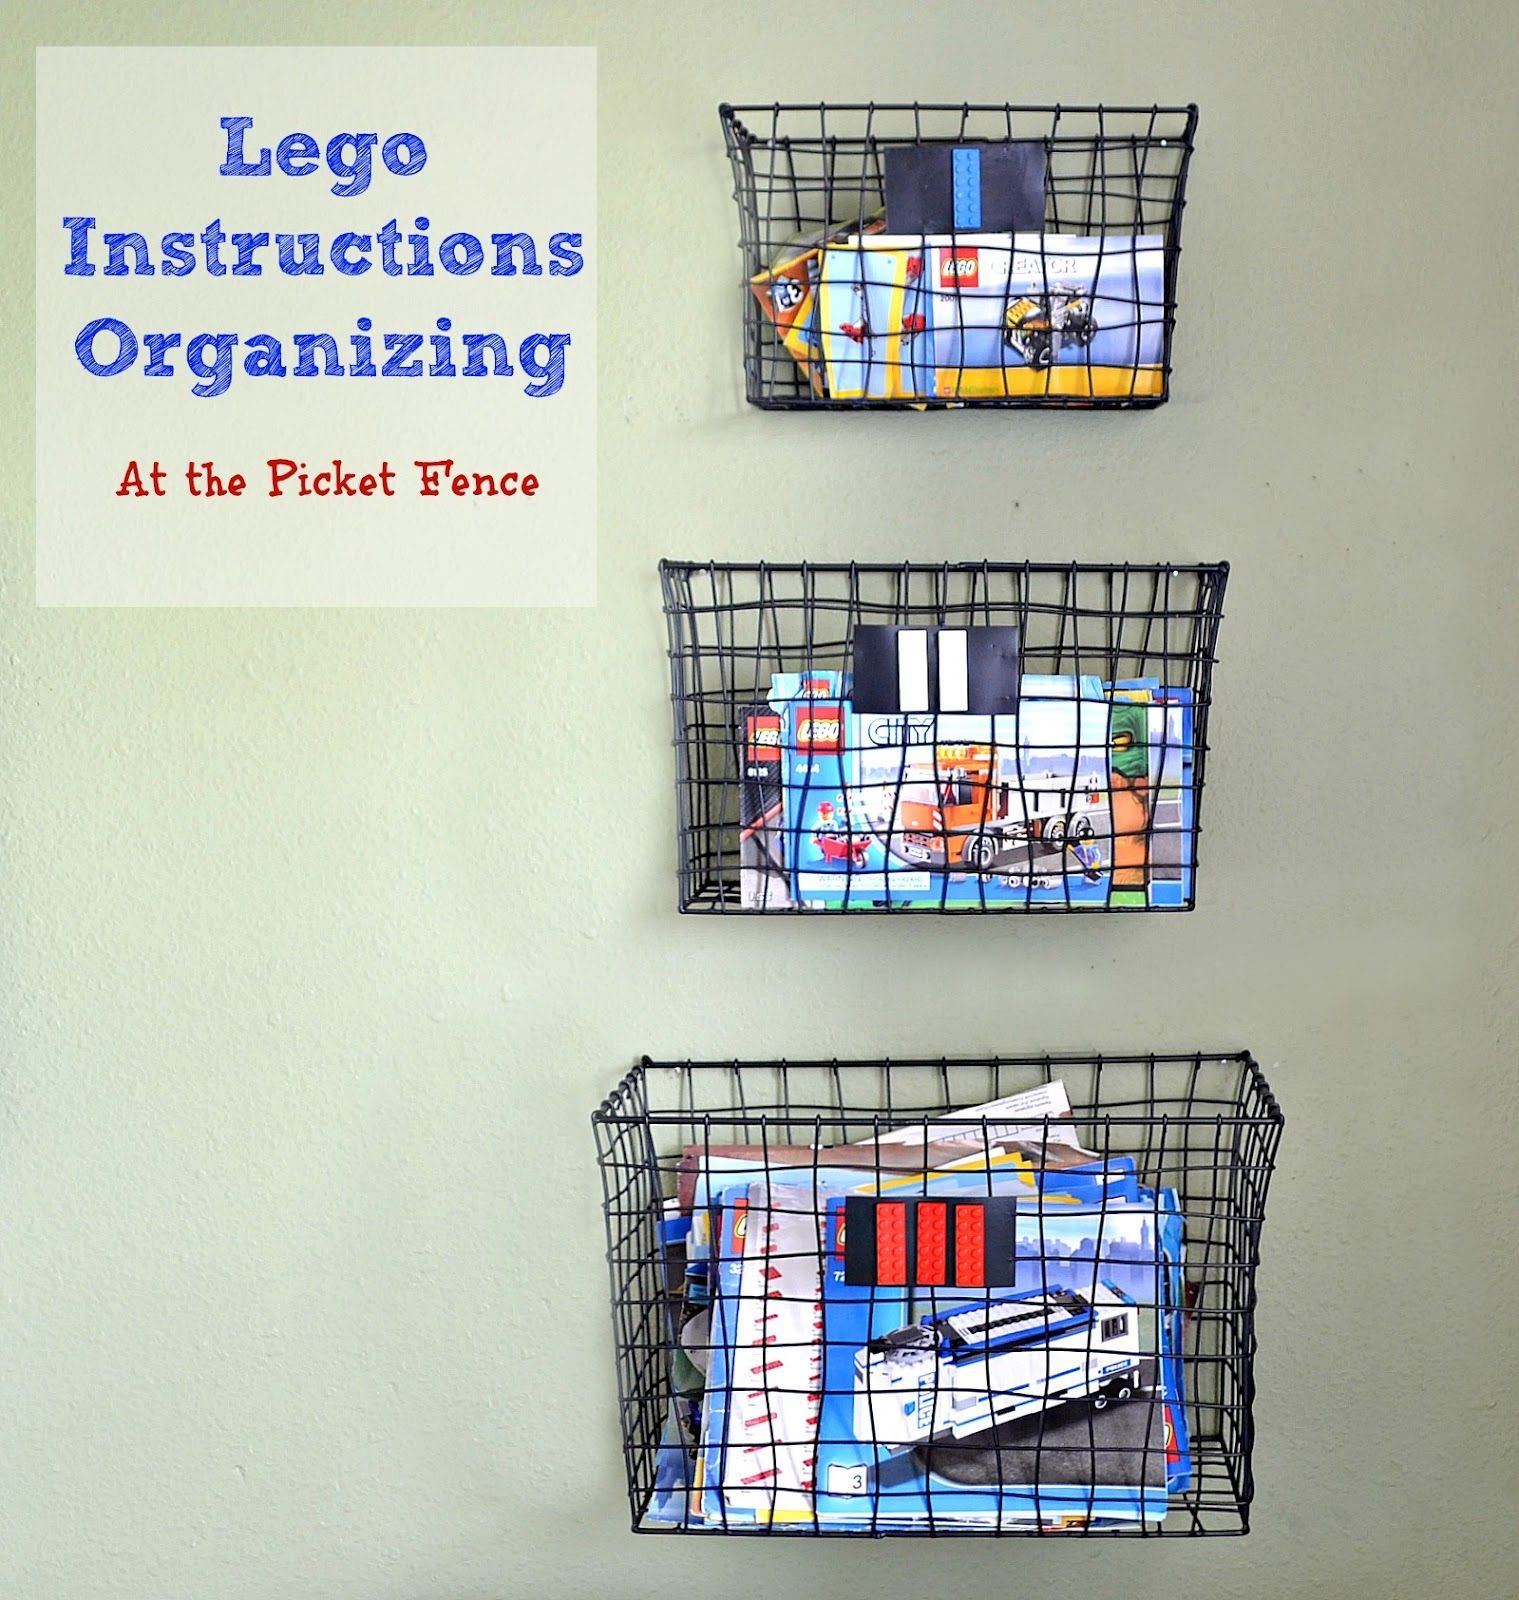 At The Picket Fence: Organizing Lego Instructions